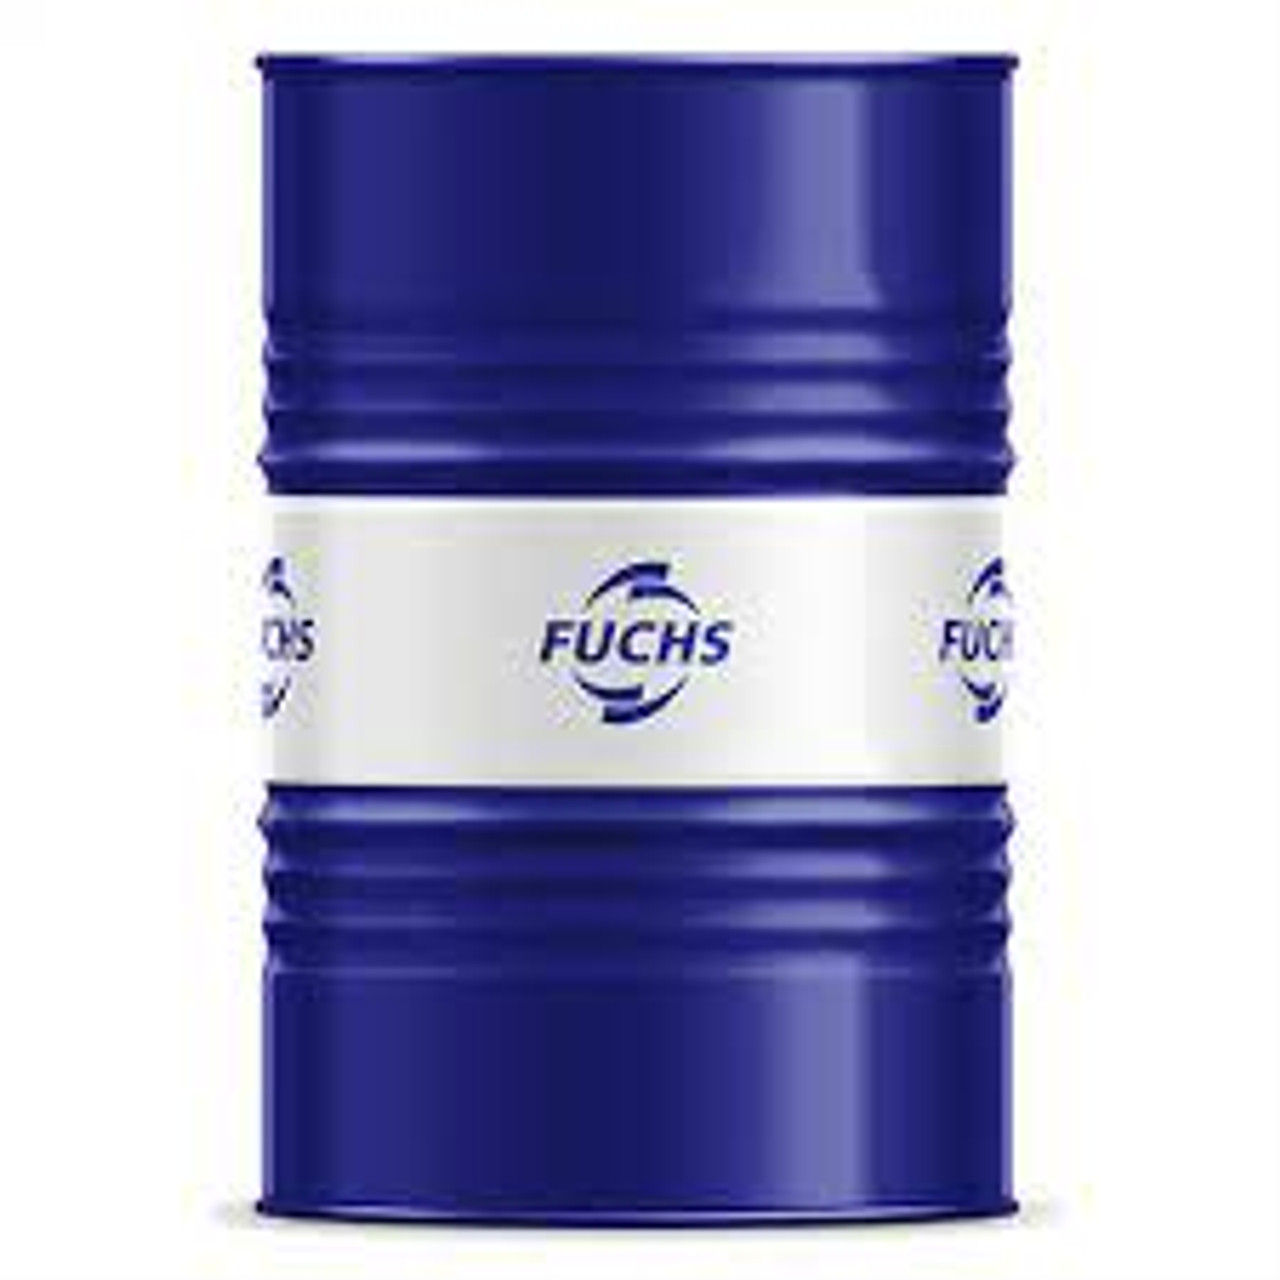 Fuchs Renolin B 22 HVI - 55 Gallon Drum